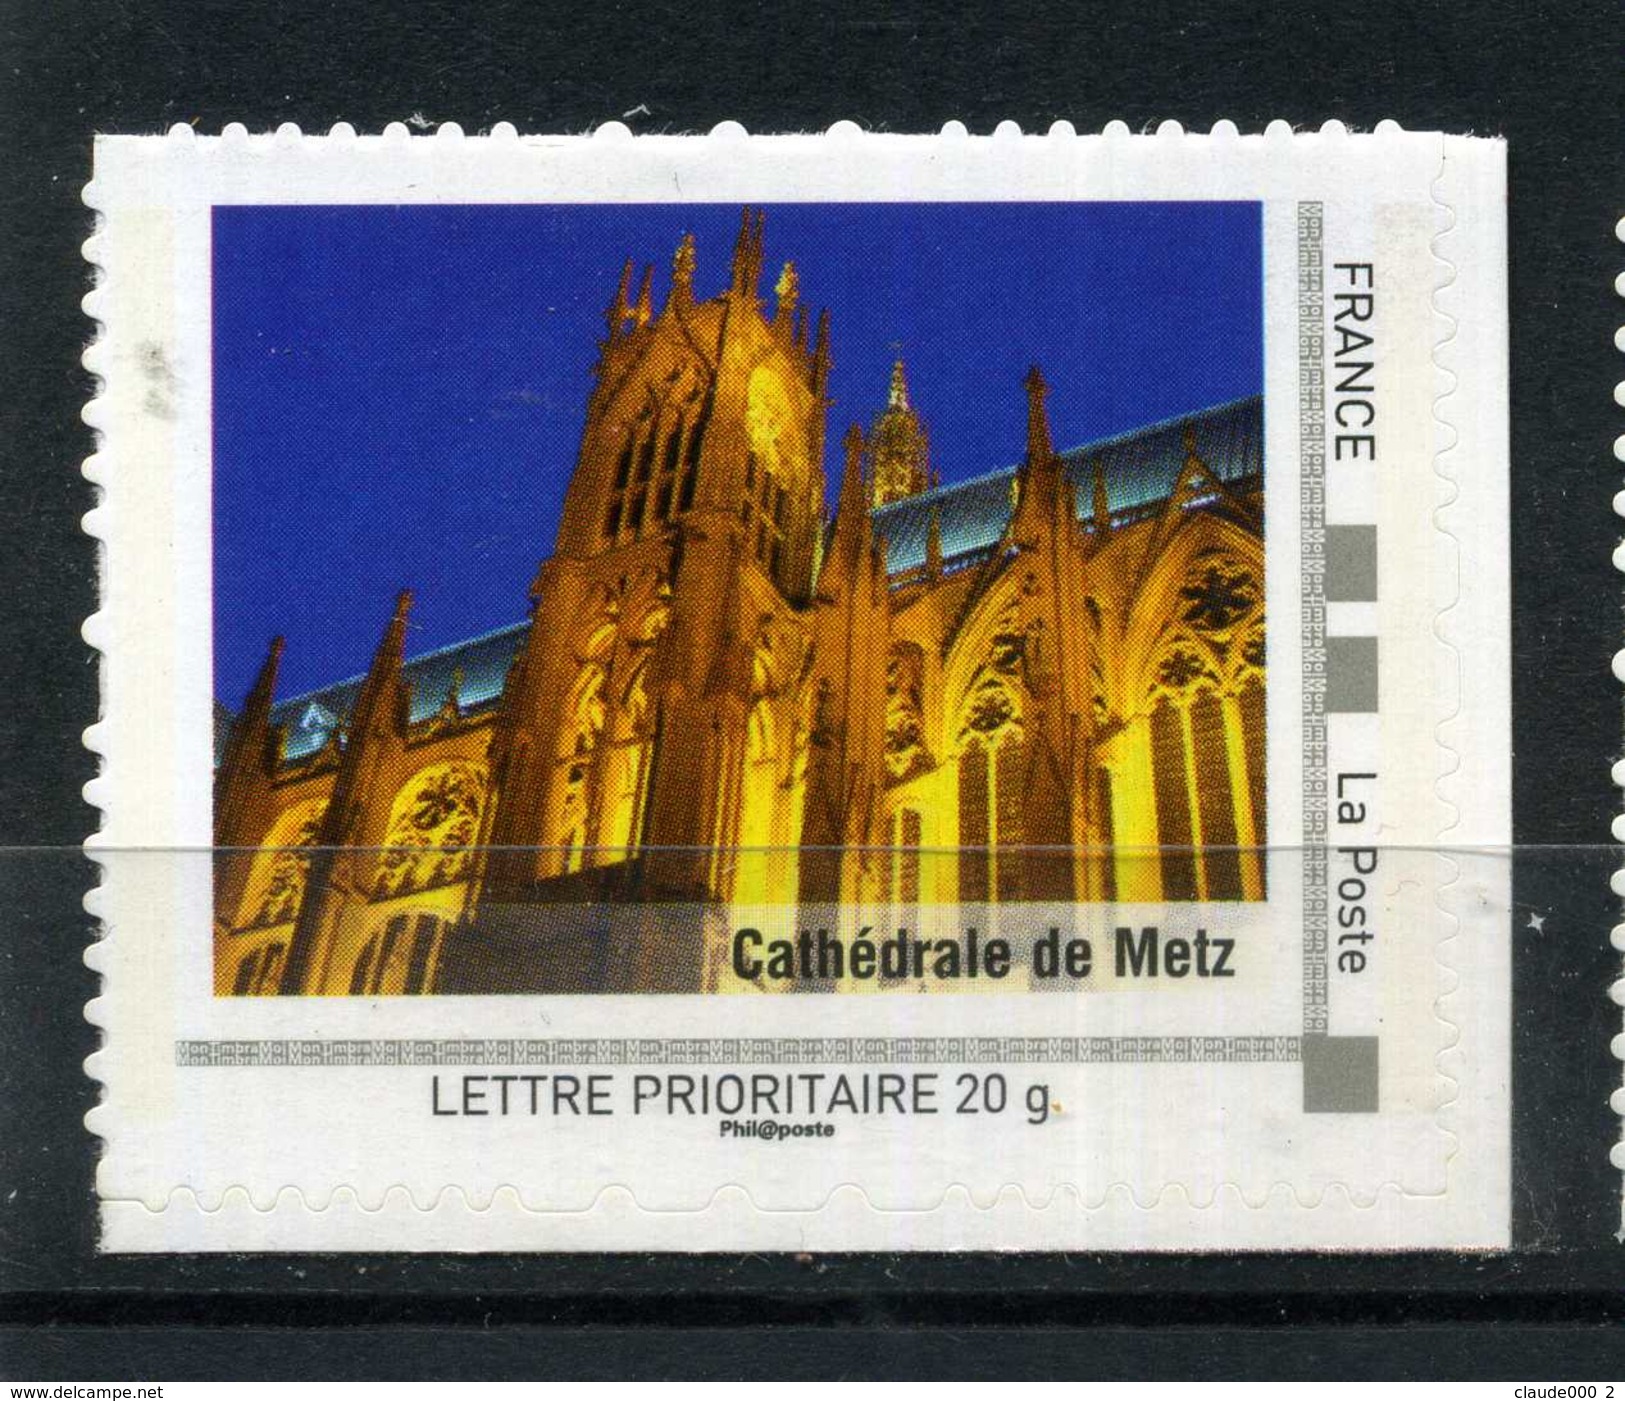 Cathédrale De METZ Adhésif Neuf ** . Collector " La Lorraine "  2009 - Collectors